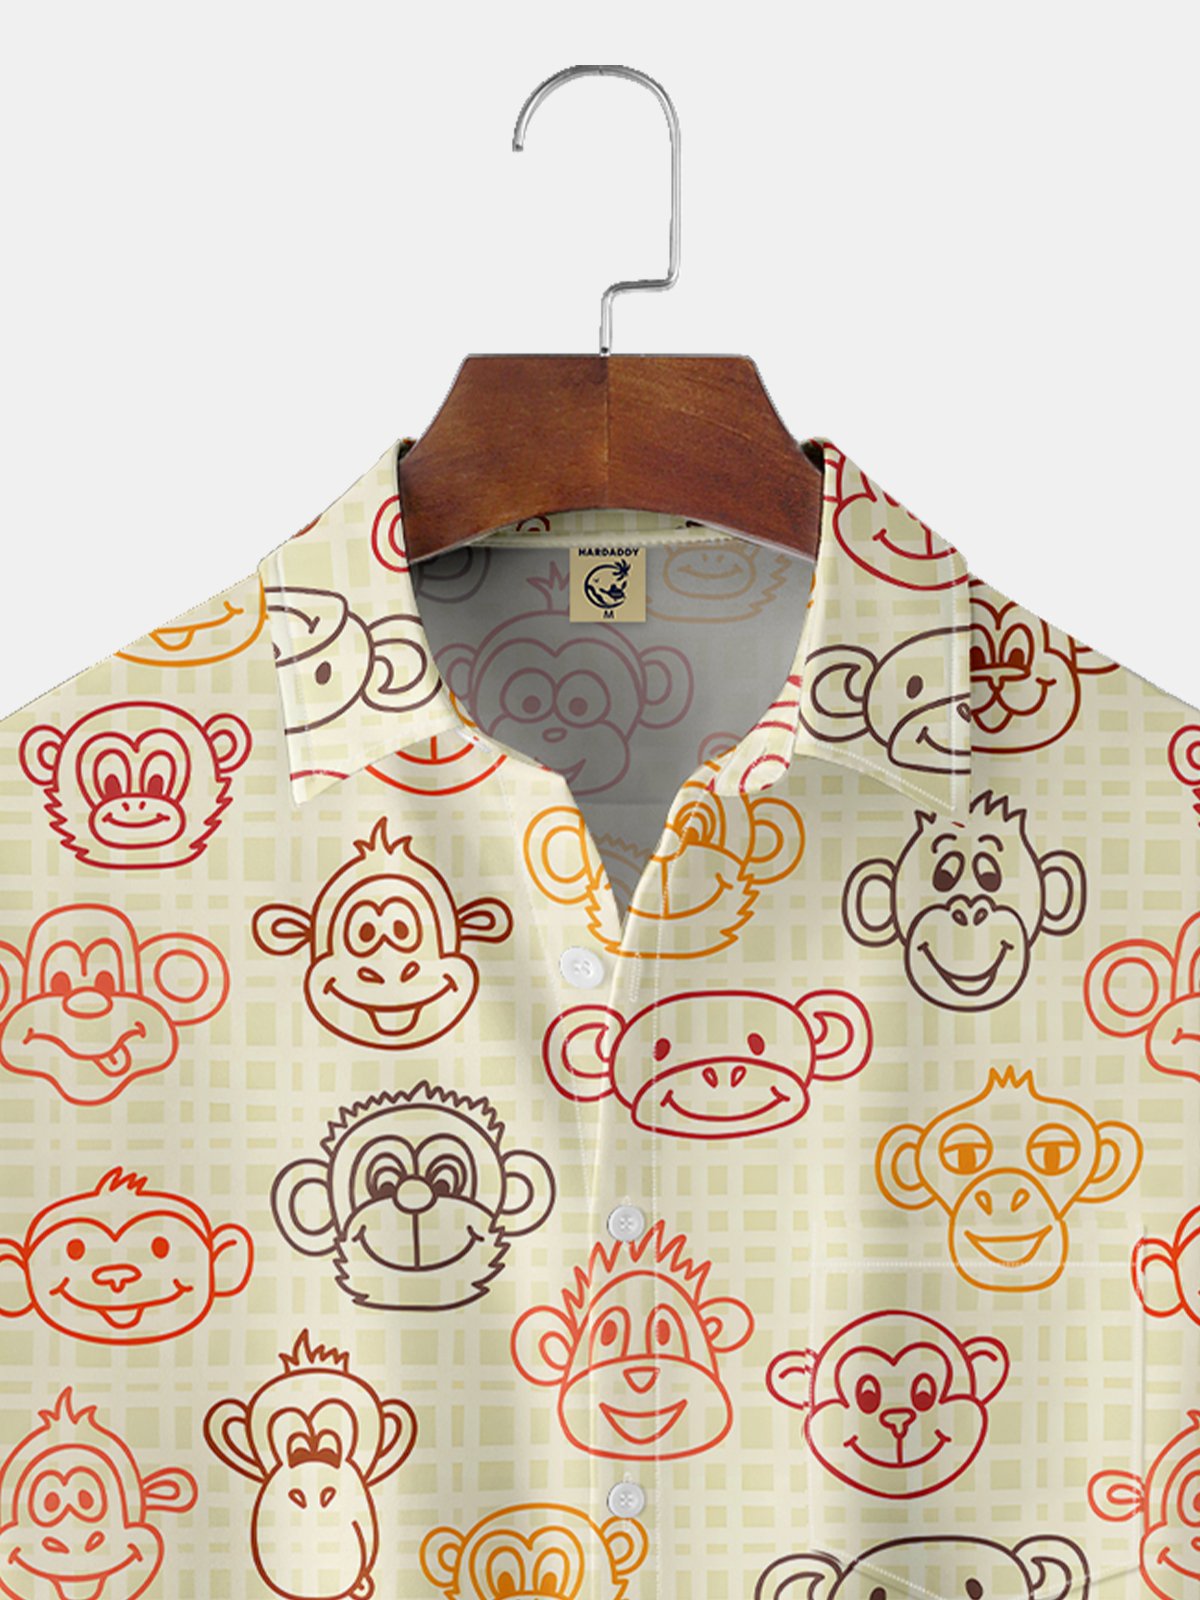 Moisture-wicking Monkey Chest Pocket Hawaiian Shirt